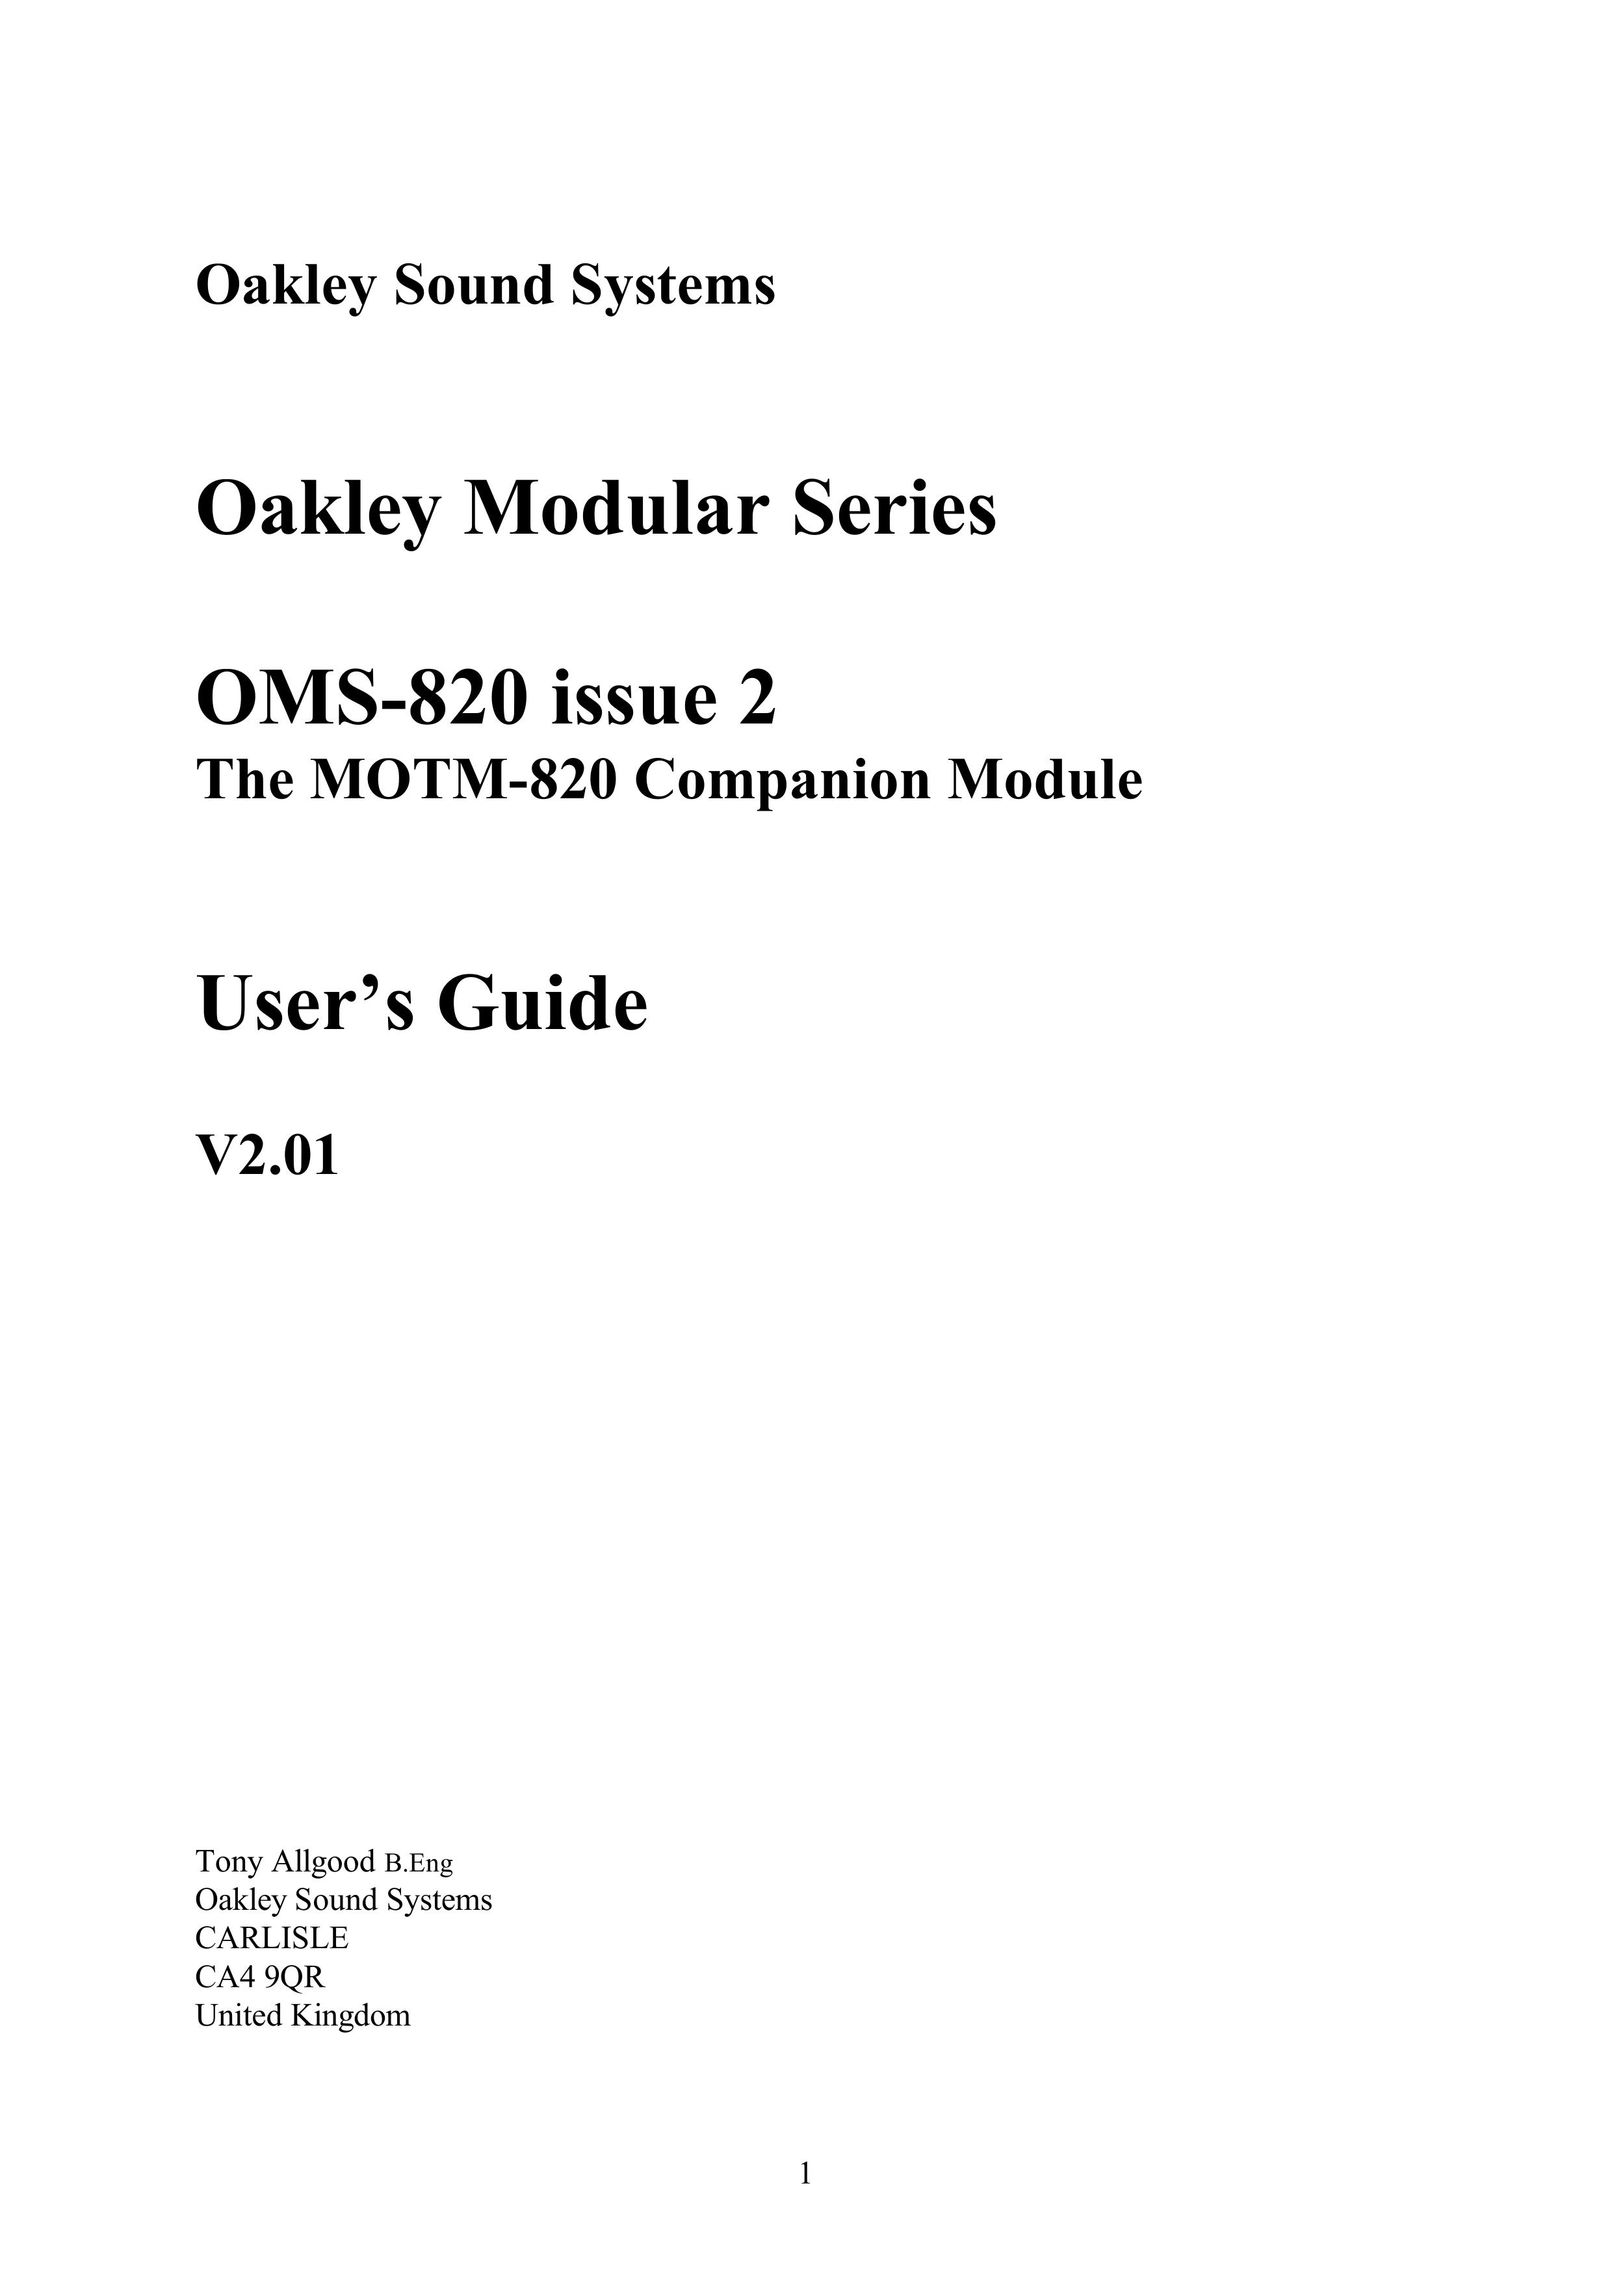 Oakley MOTM-820 Network Card User Manual